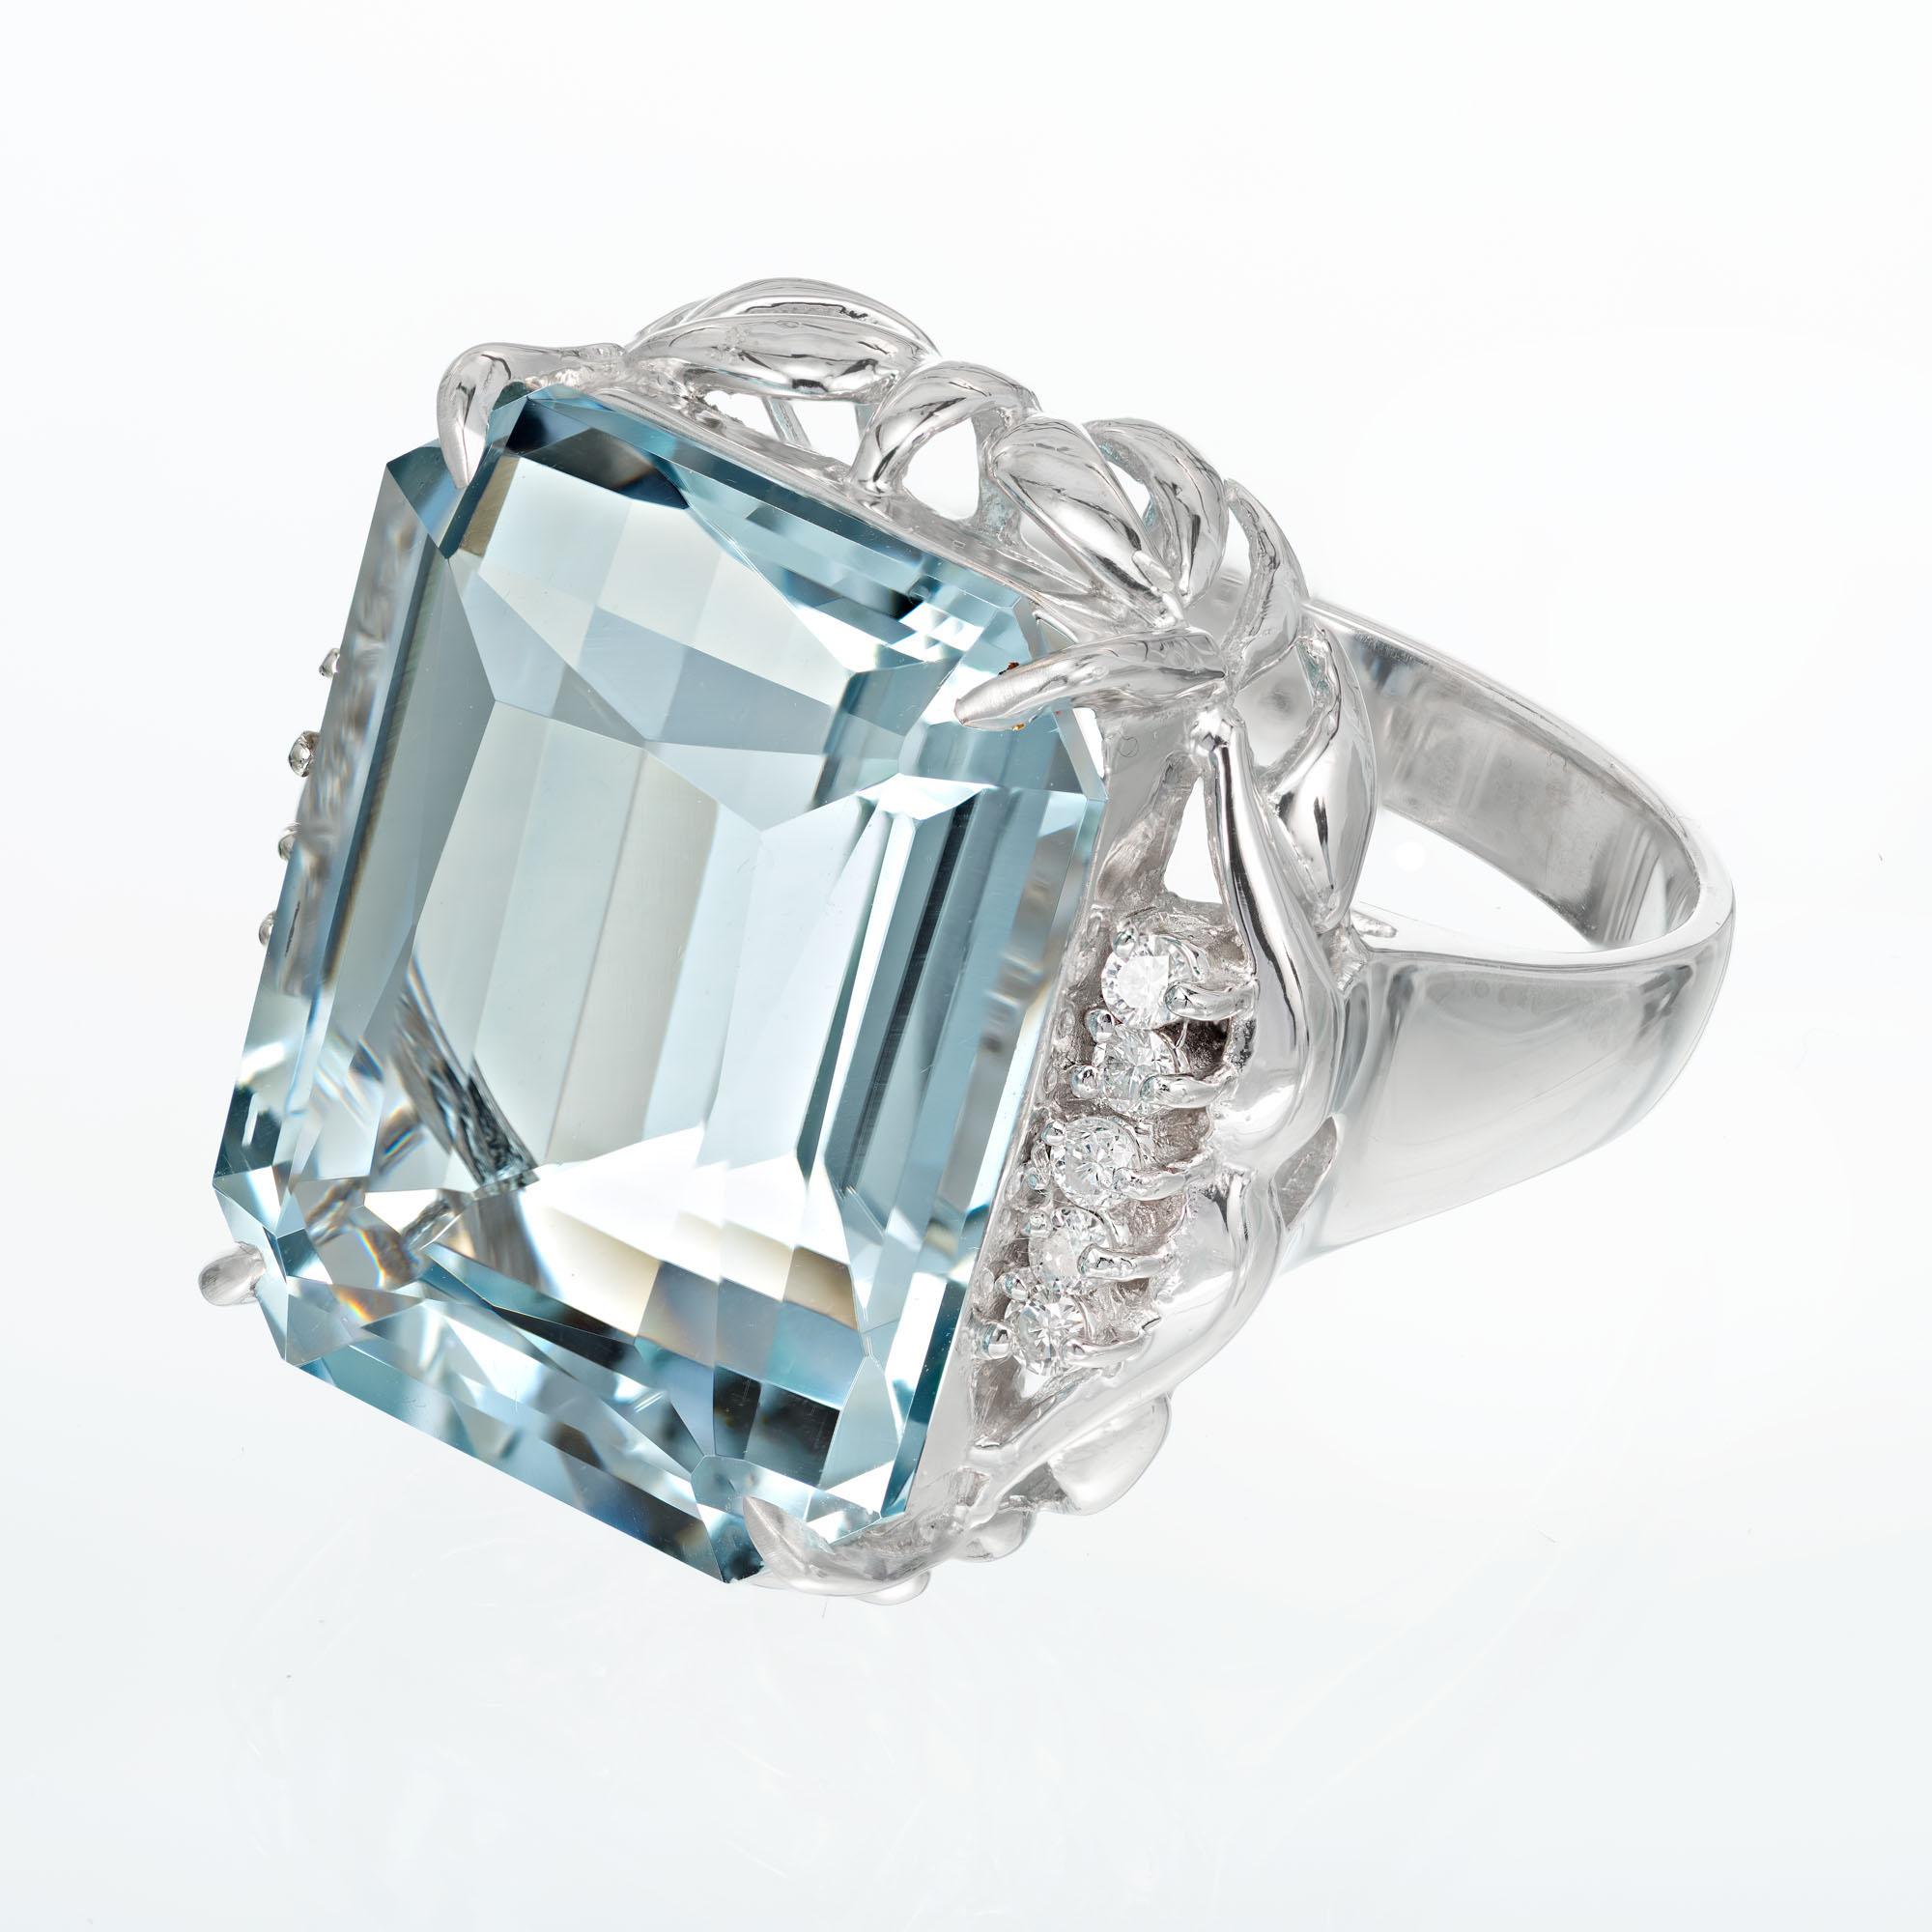 Emerald and diamond cocktail ring. 16.11 carat natural aquamarine in its original platinum 1950's setting with round accent diamonds. 

1 cut cornered emerald cut light blue aquamarine VVS, approx. 16.11cts
10 round brilliant cut diamonds H SI,